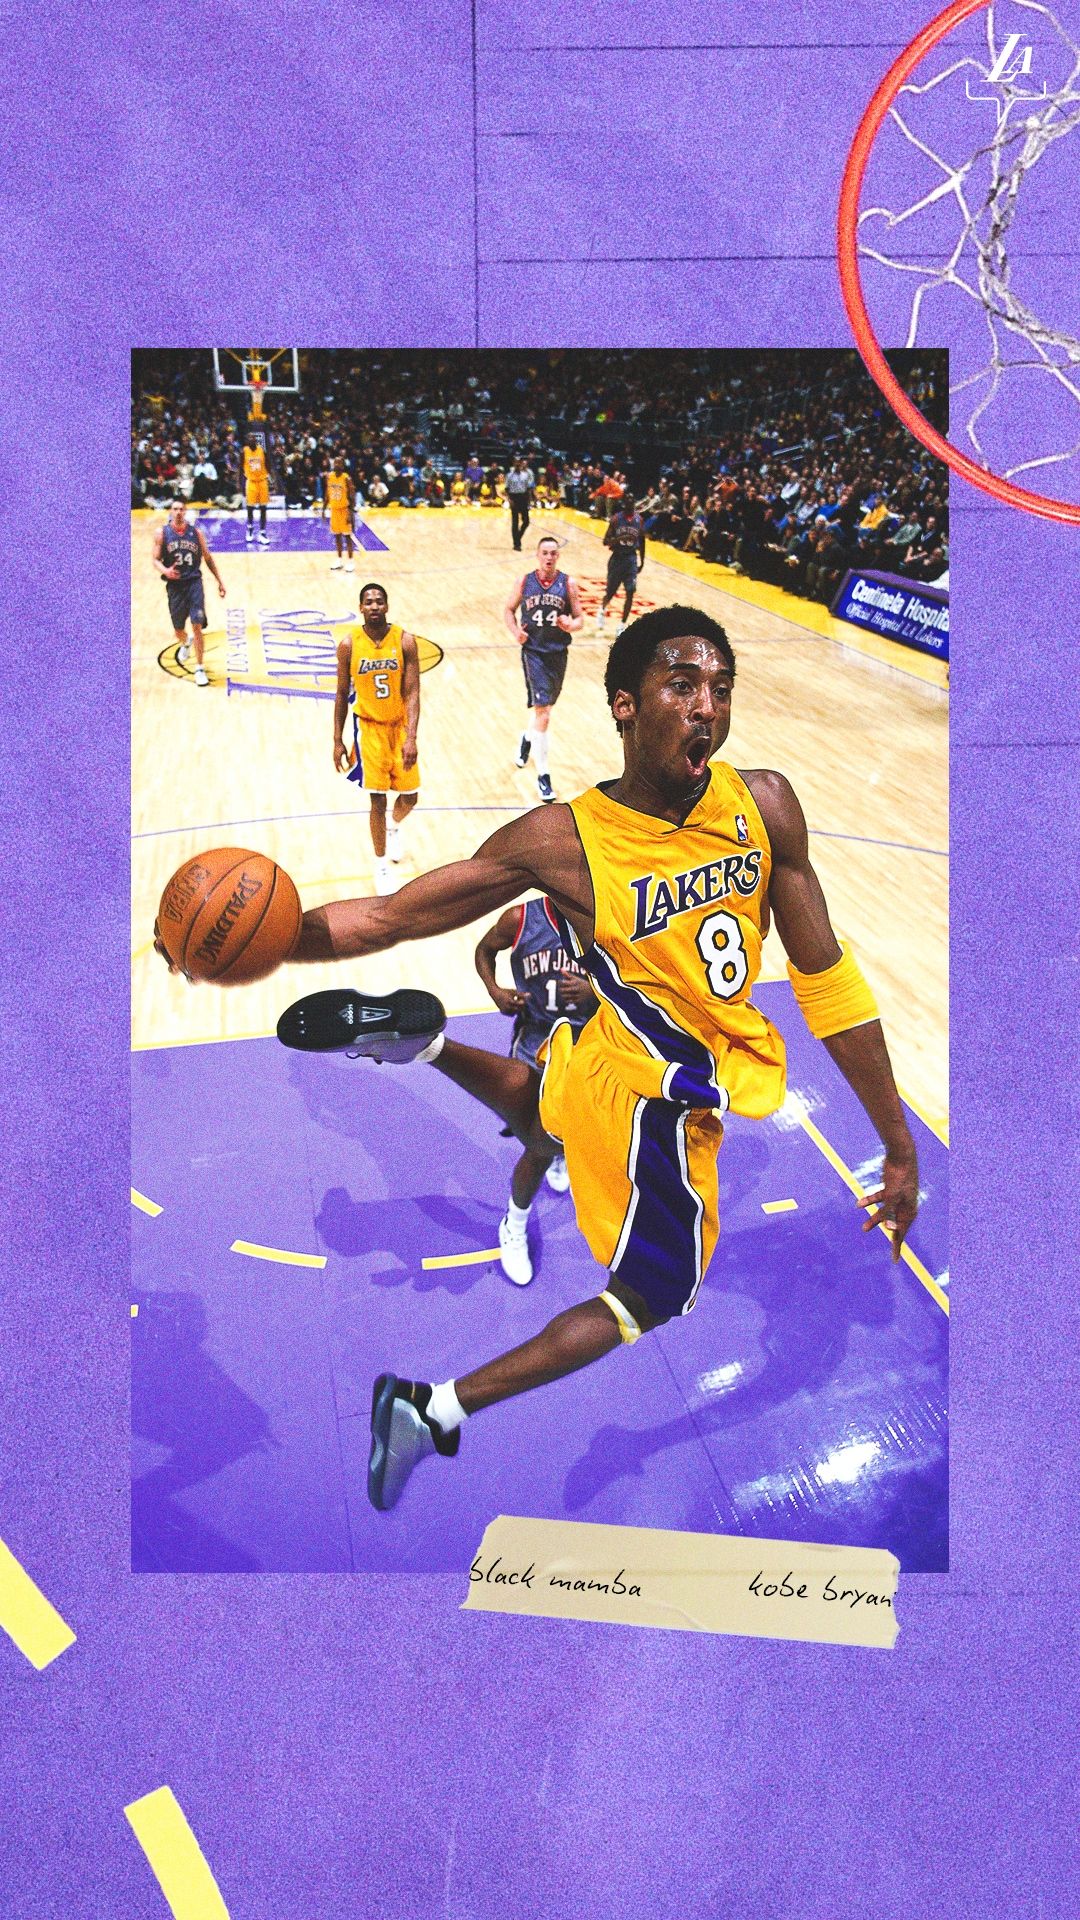 Wallpaper. Los Angeles Lakers. Los Angeles Lakers